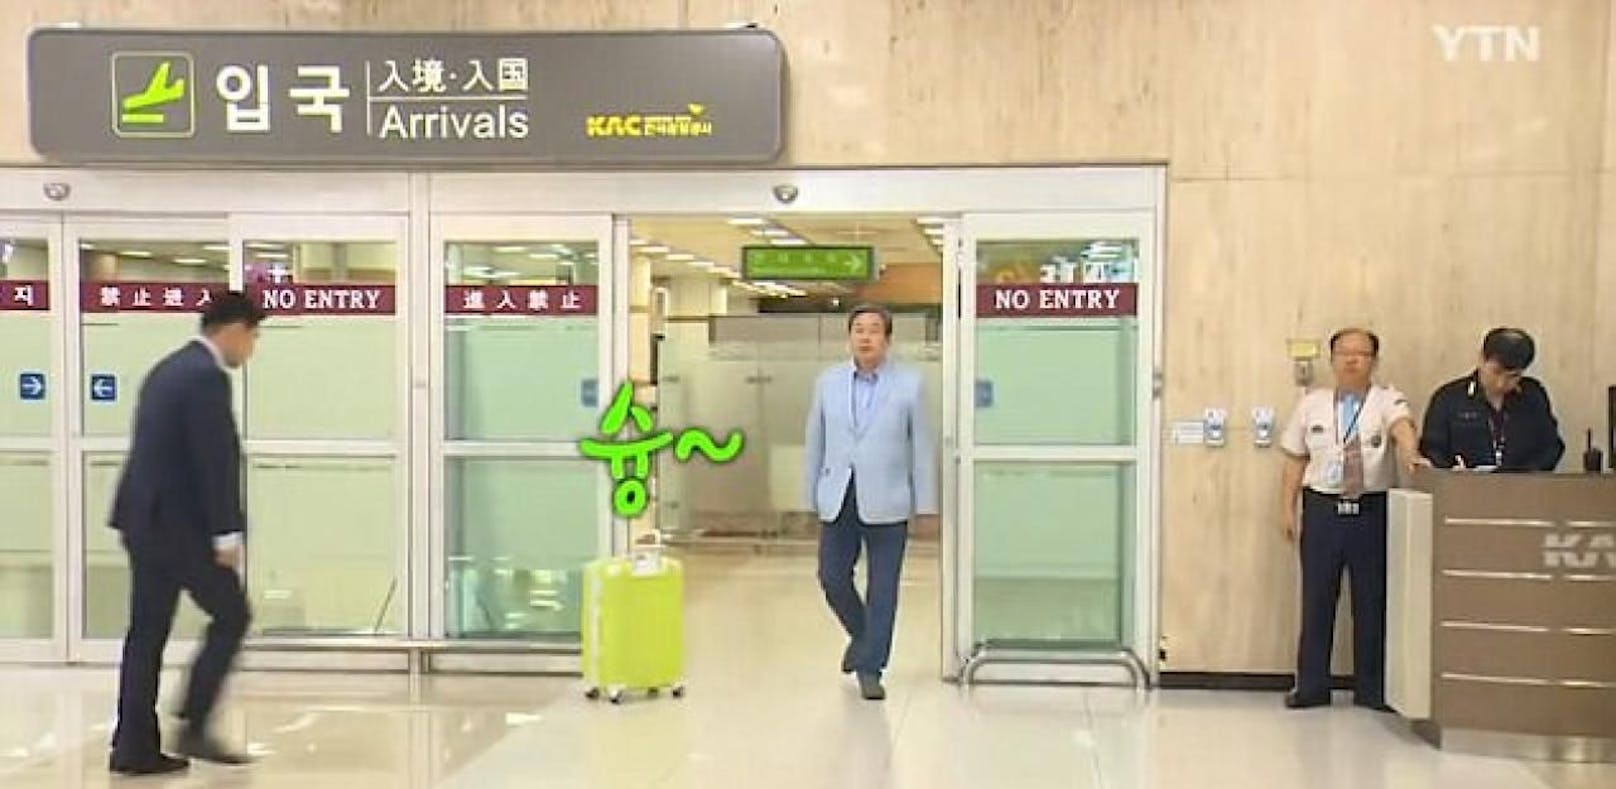 Auftritt: Politiker macht "Koffer-Trick" am Airport